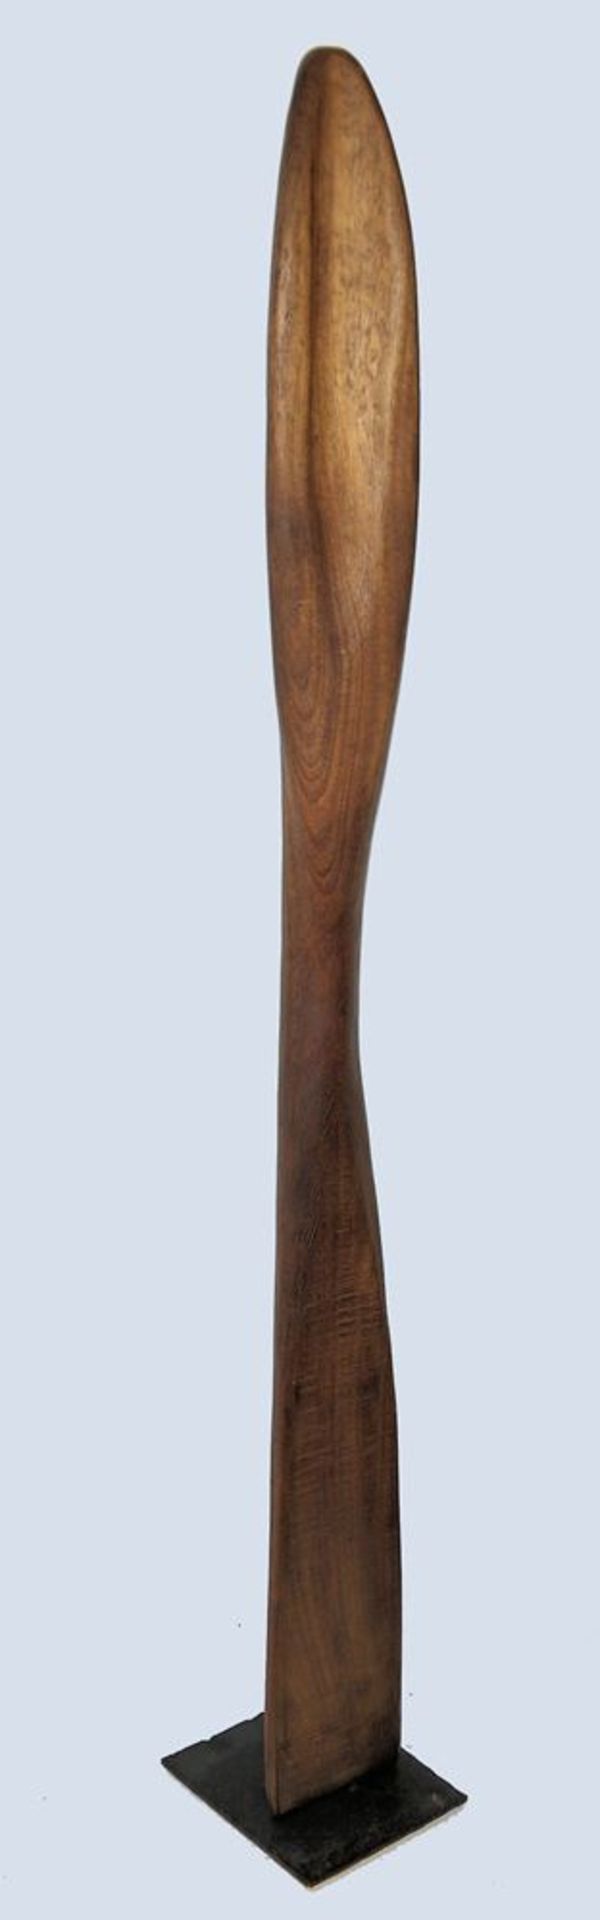 Paul Dierkes, "Vegetative Form", wooden sculpture from 1958 - Image 2 of 3